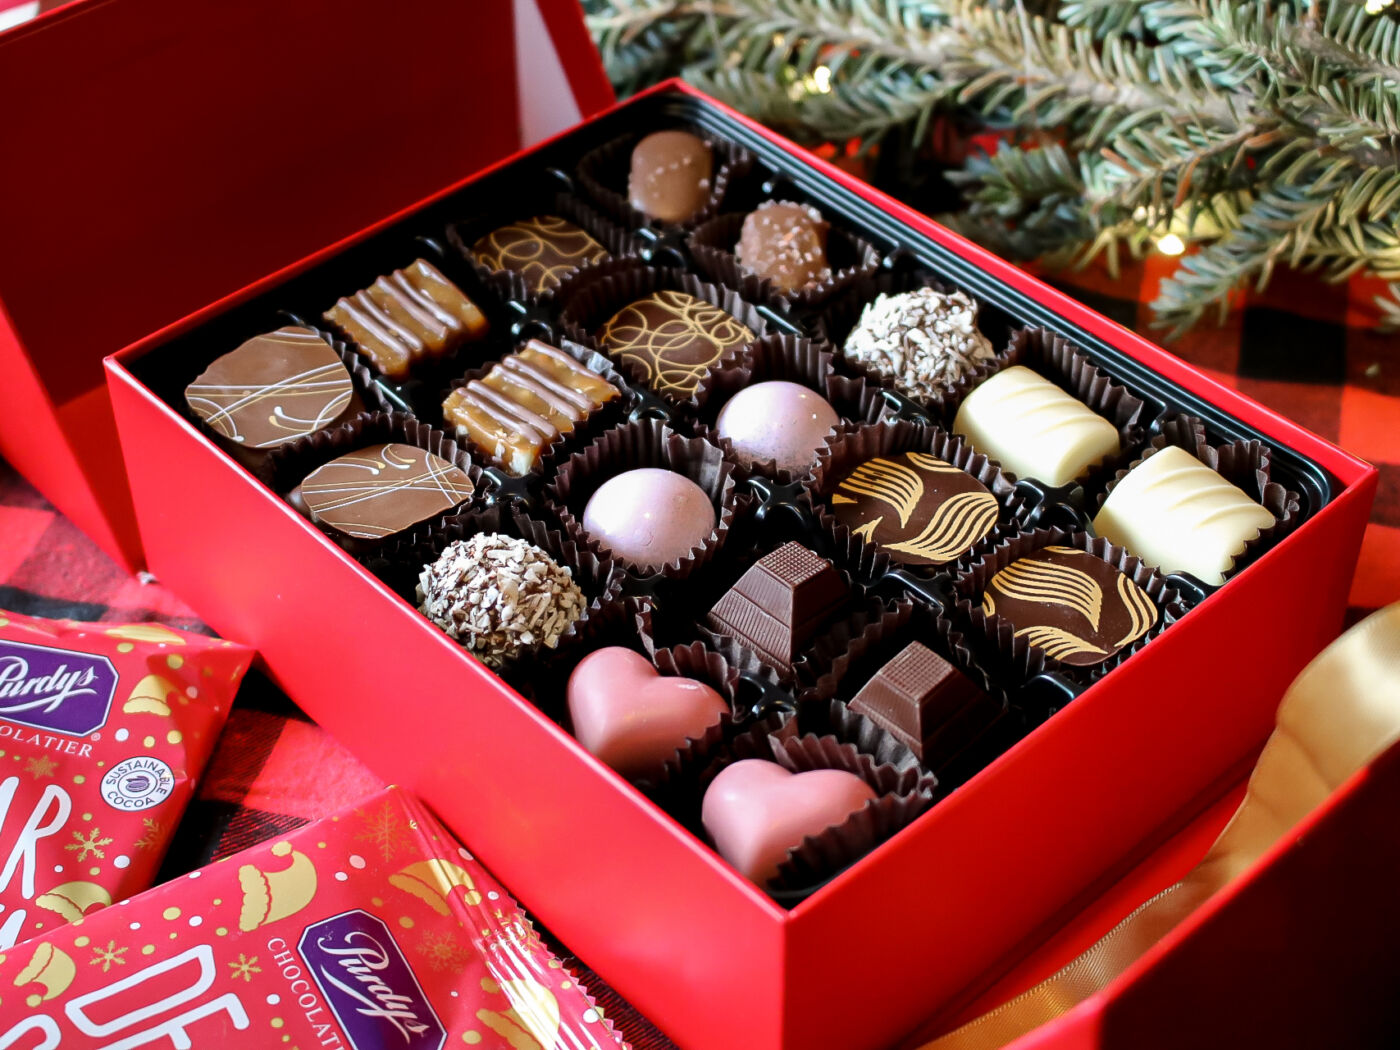 purdys dear santa gift box chocolates